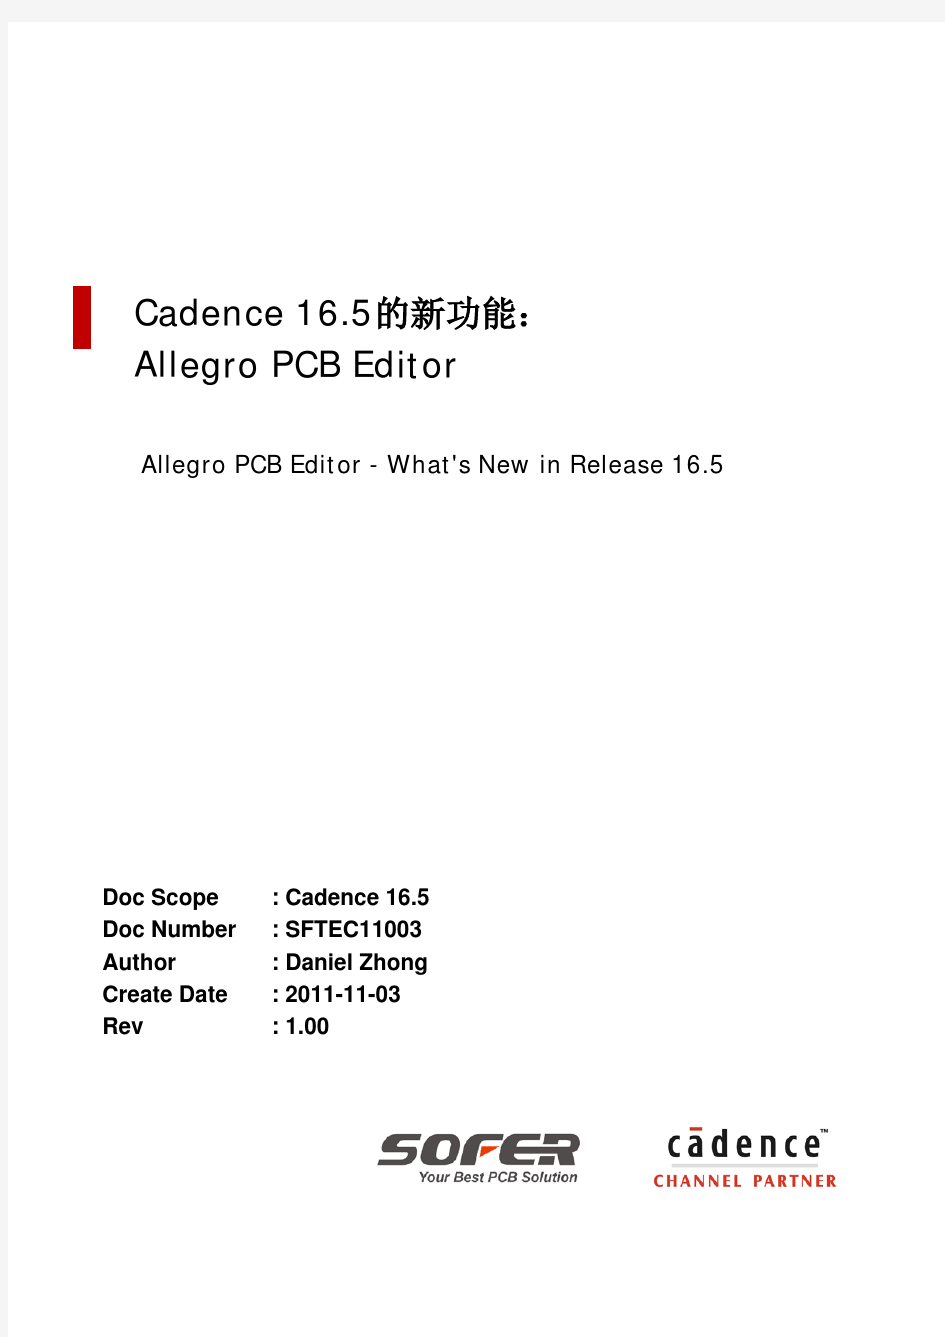 Cadence 16.5的新功能 - Allegro PCB Editor